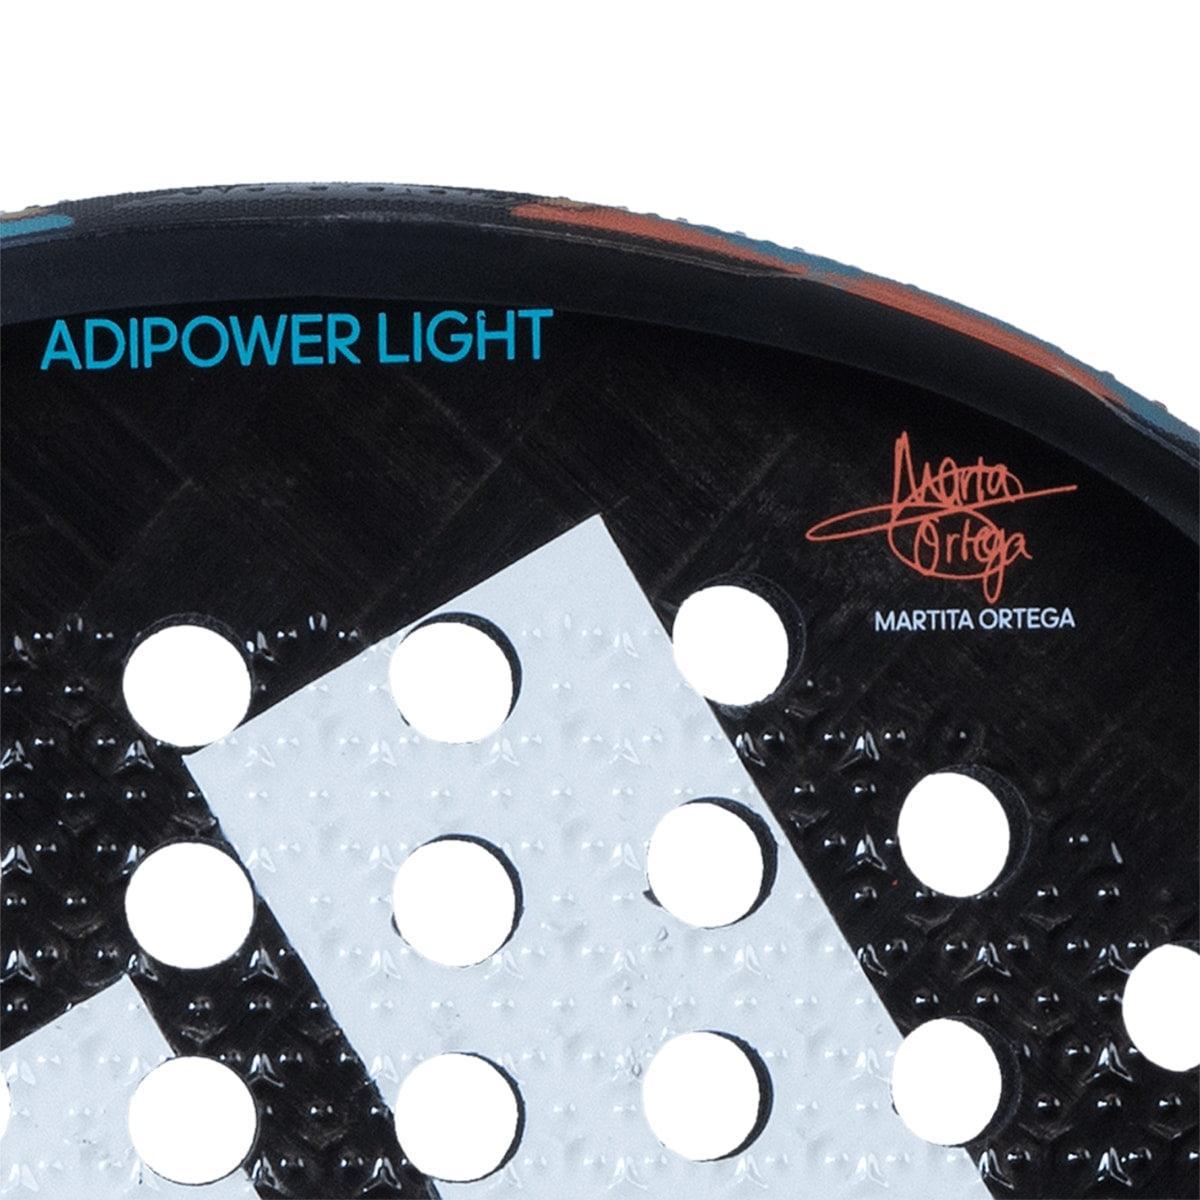 Adidas Adipower Light 3.2 Padelracket